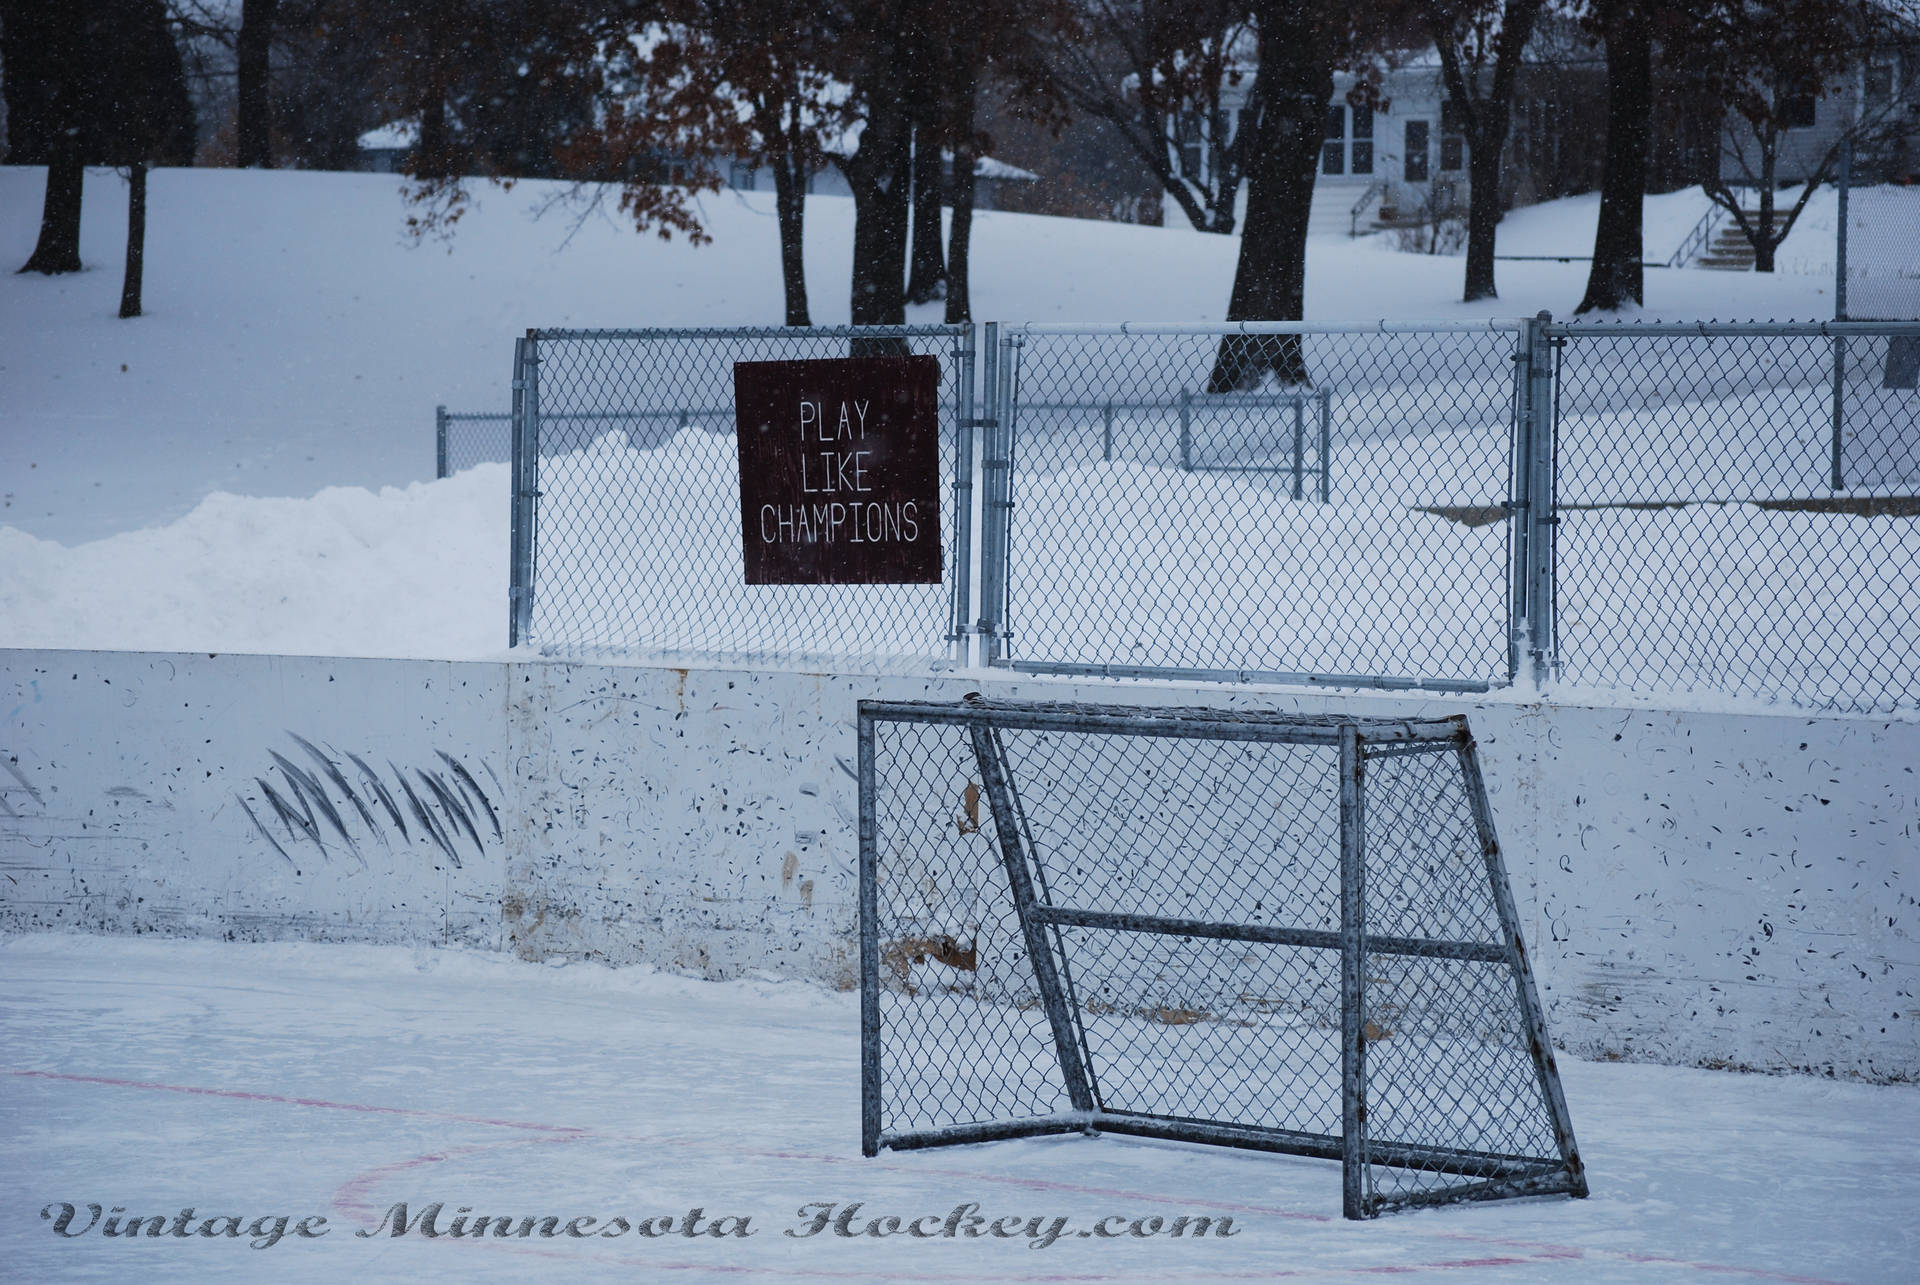 Snowy Outdoor Rink Hockey Gate Background